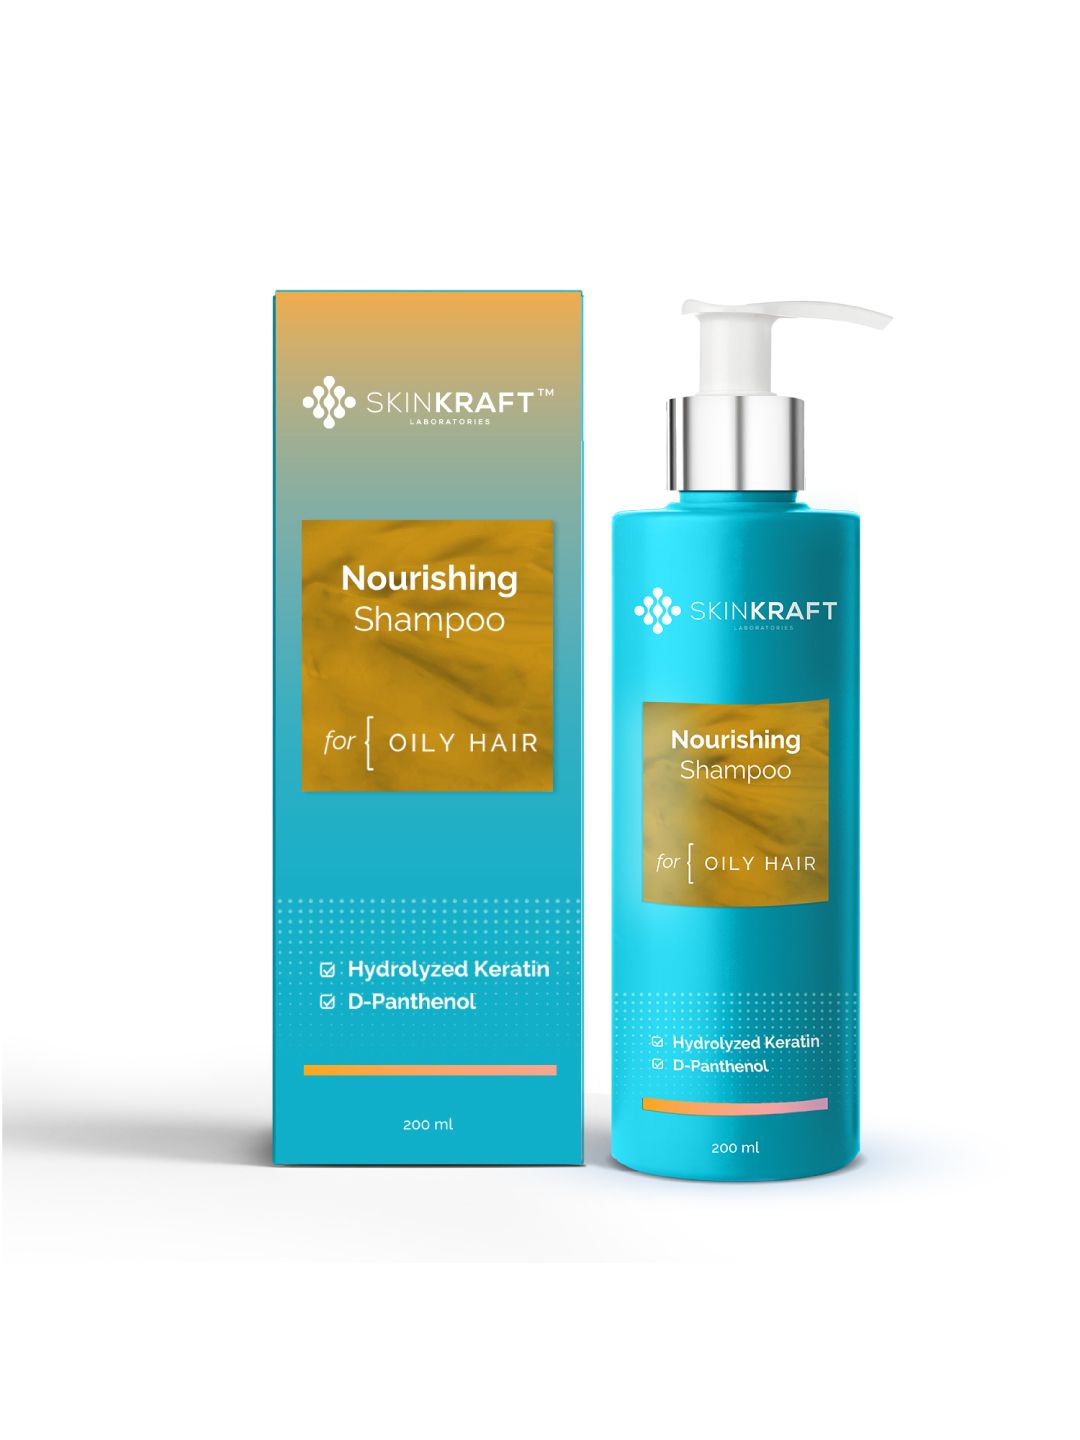 SKINKRAFT Nourishing Shampoo for Oily Hair with Hydrolyzed Keratin & D Panthenol - 200ml Price in India